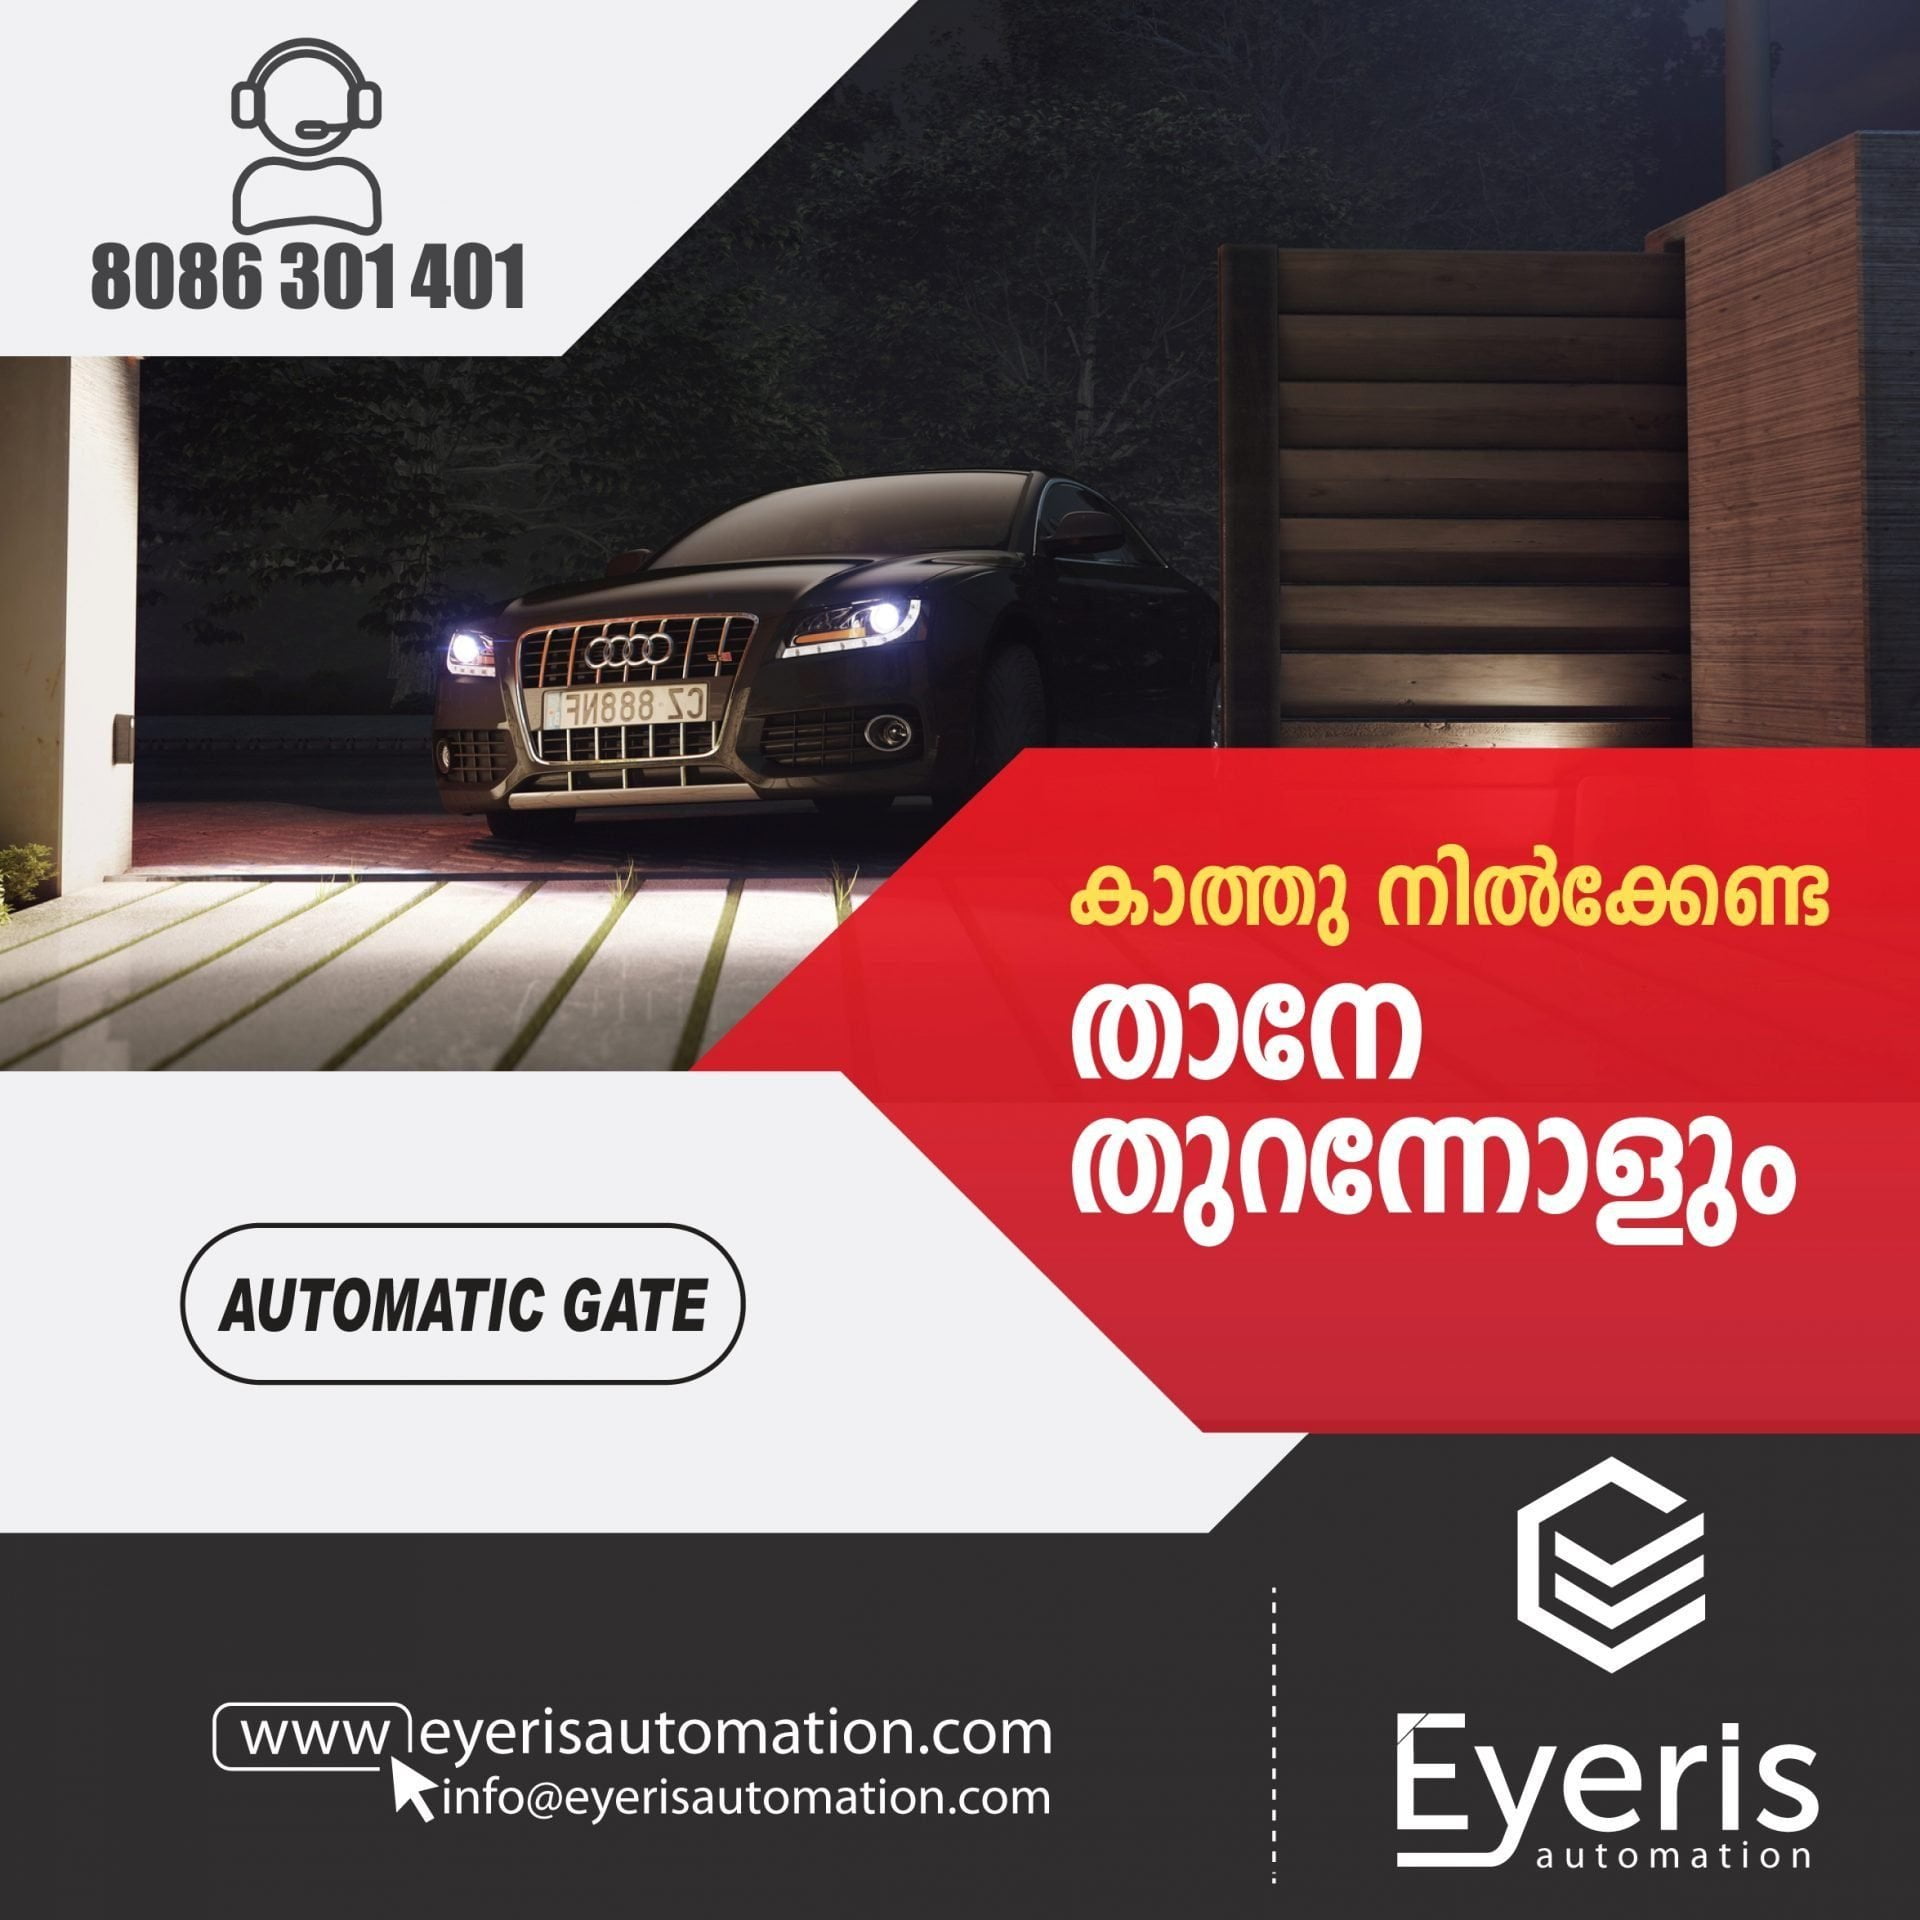 Eyeris Automation